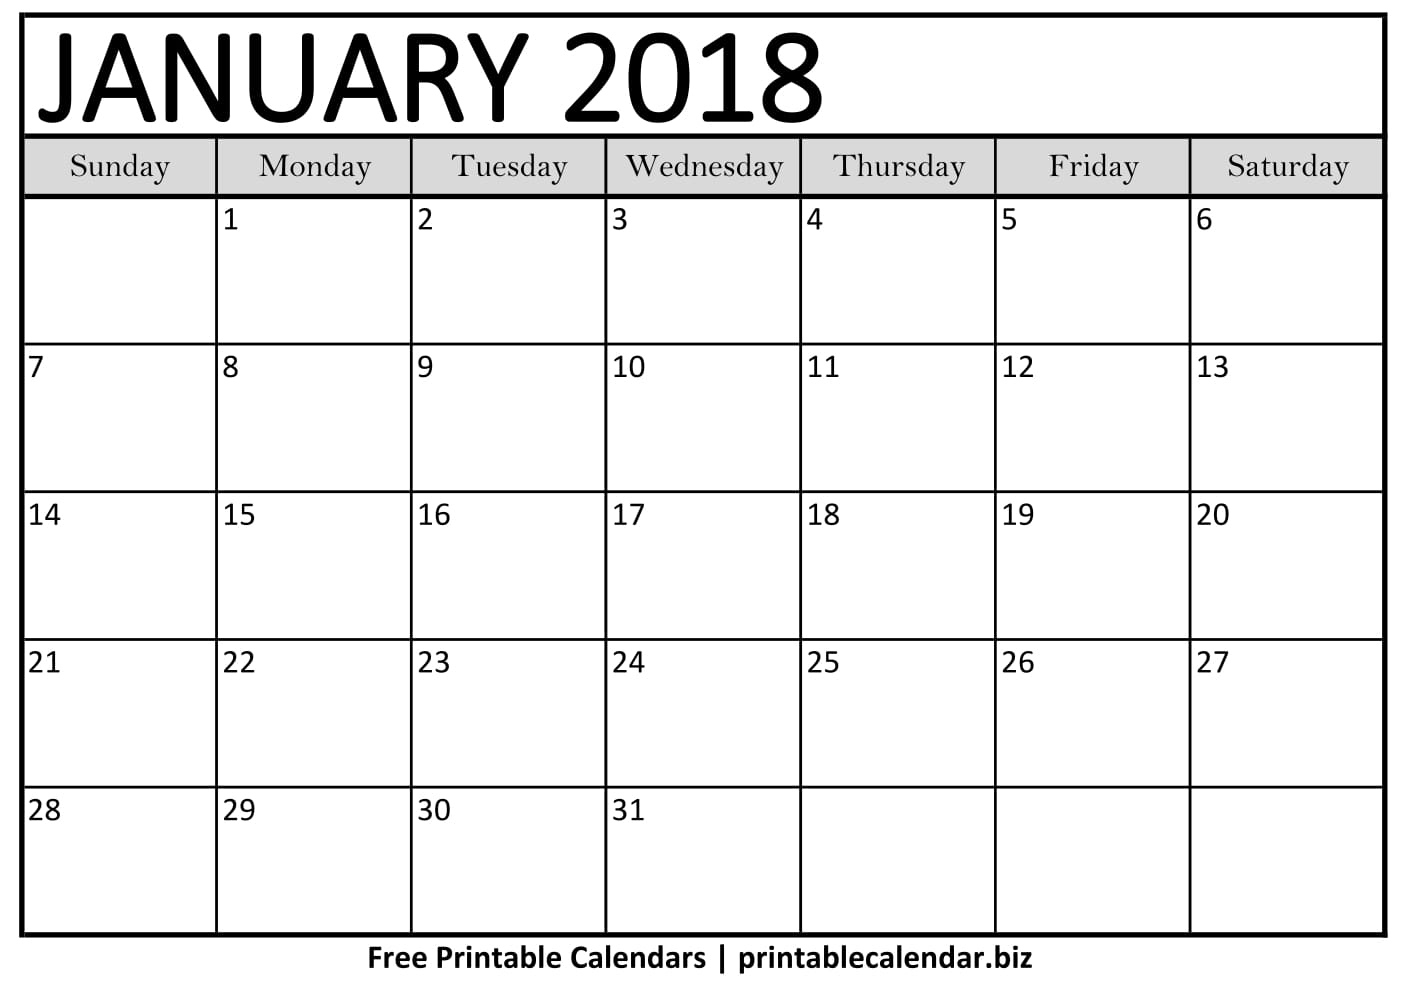 2019 Printable Calendar Templates - Printablecalendar.biz Calendar Template How To